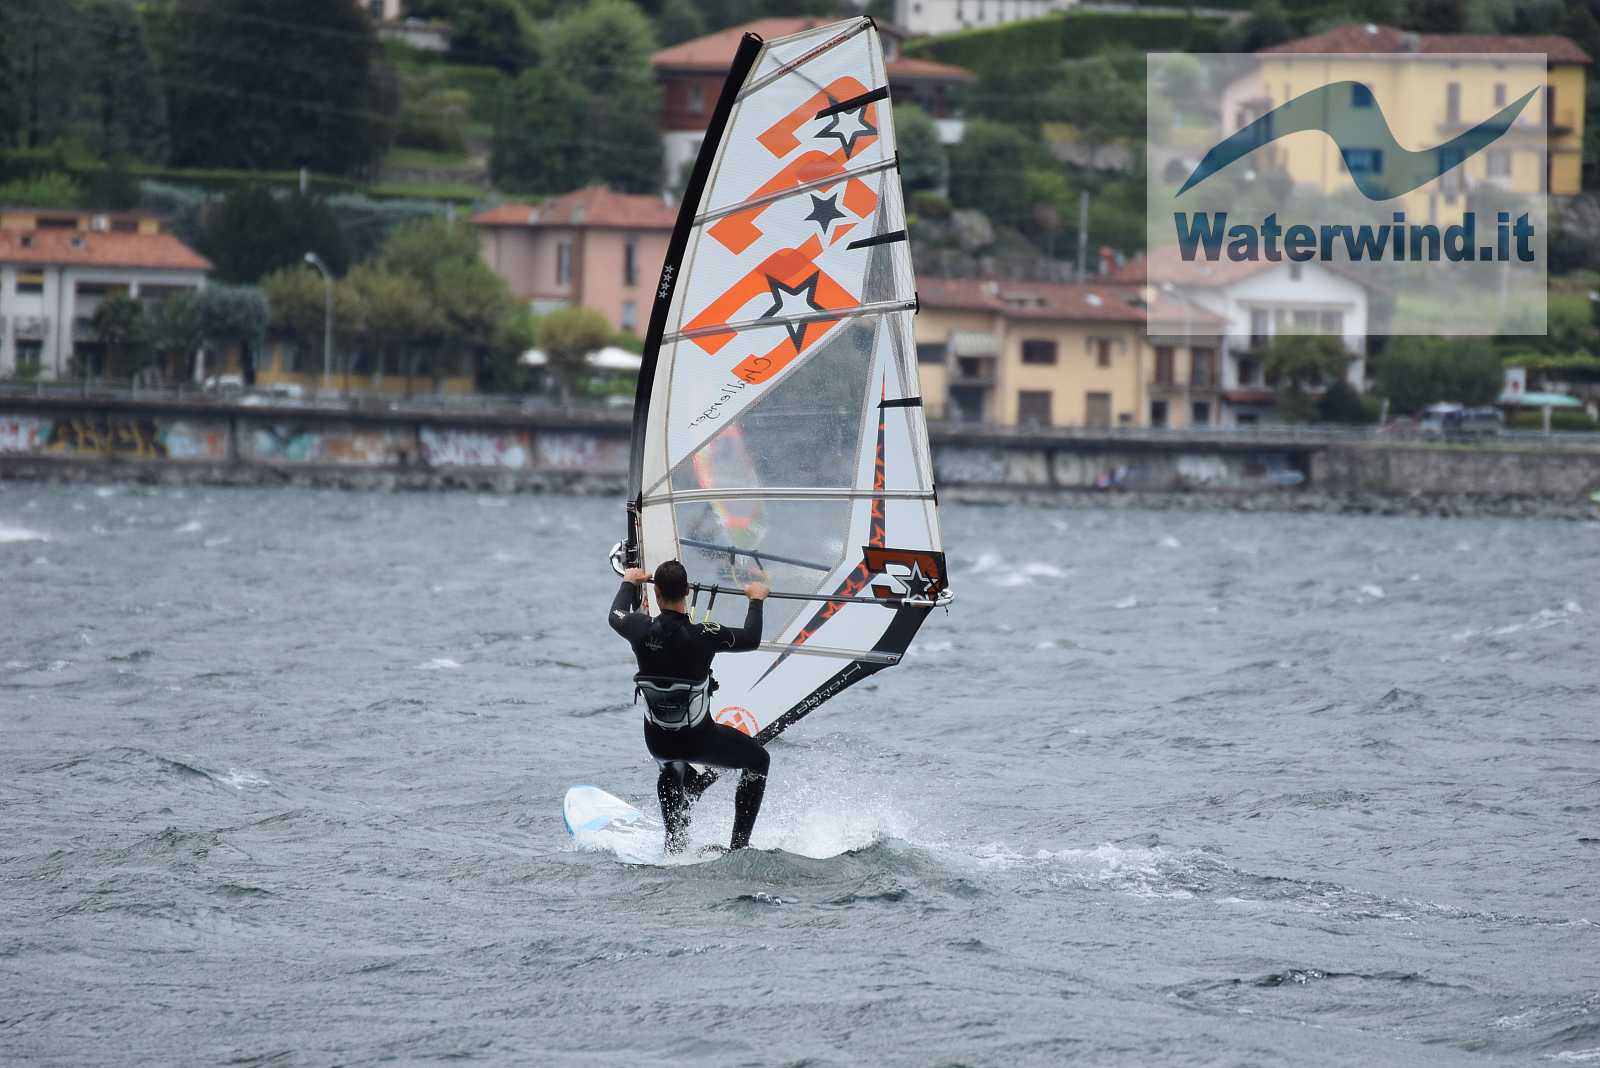 Valmadrera (Lake Como), 31 August 2018